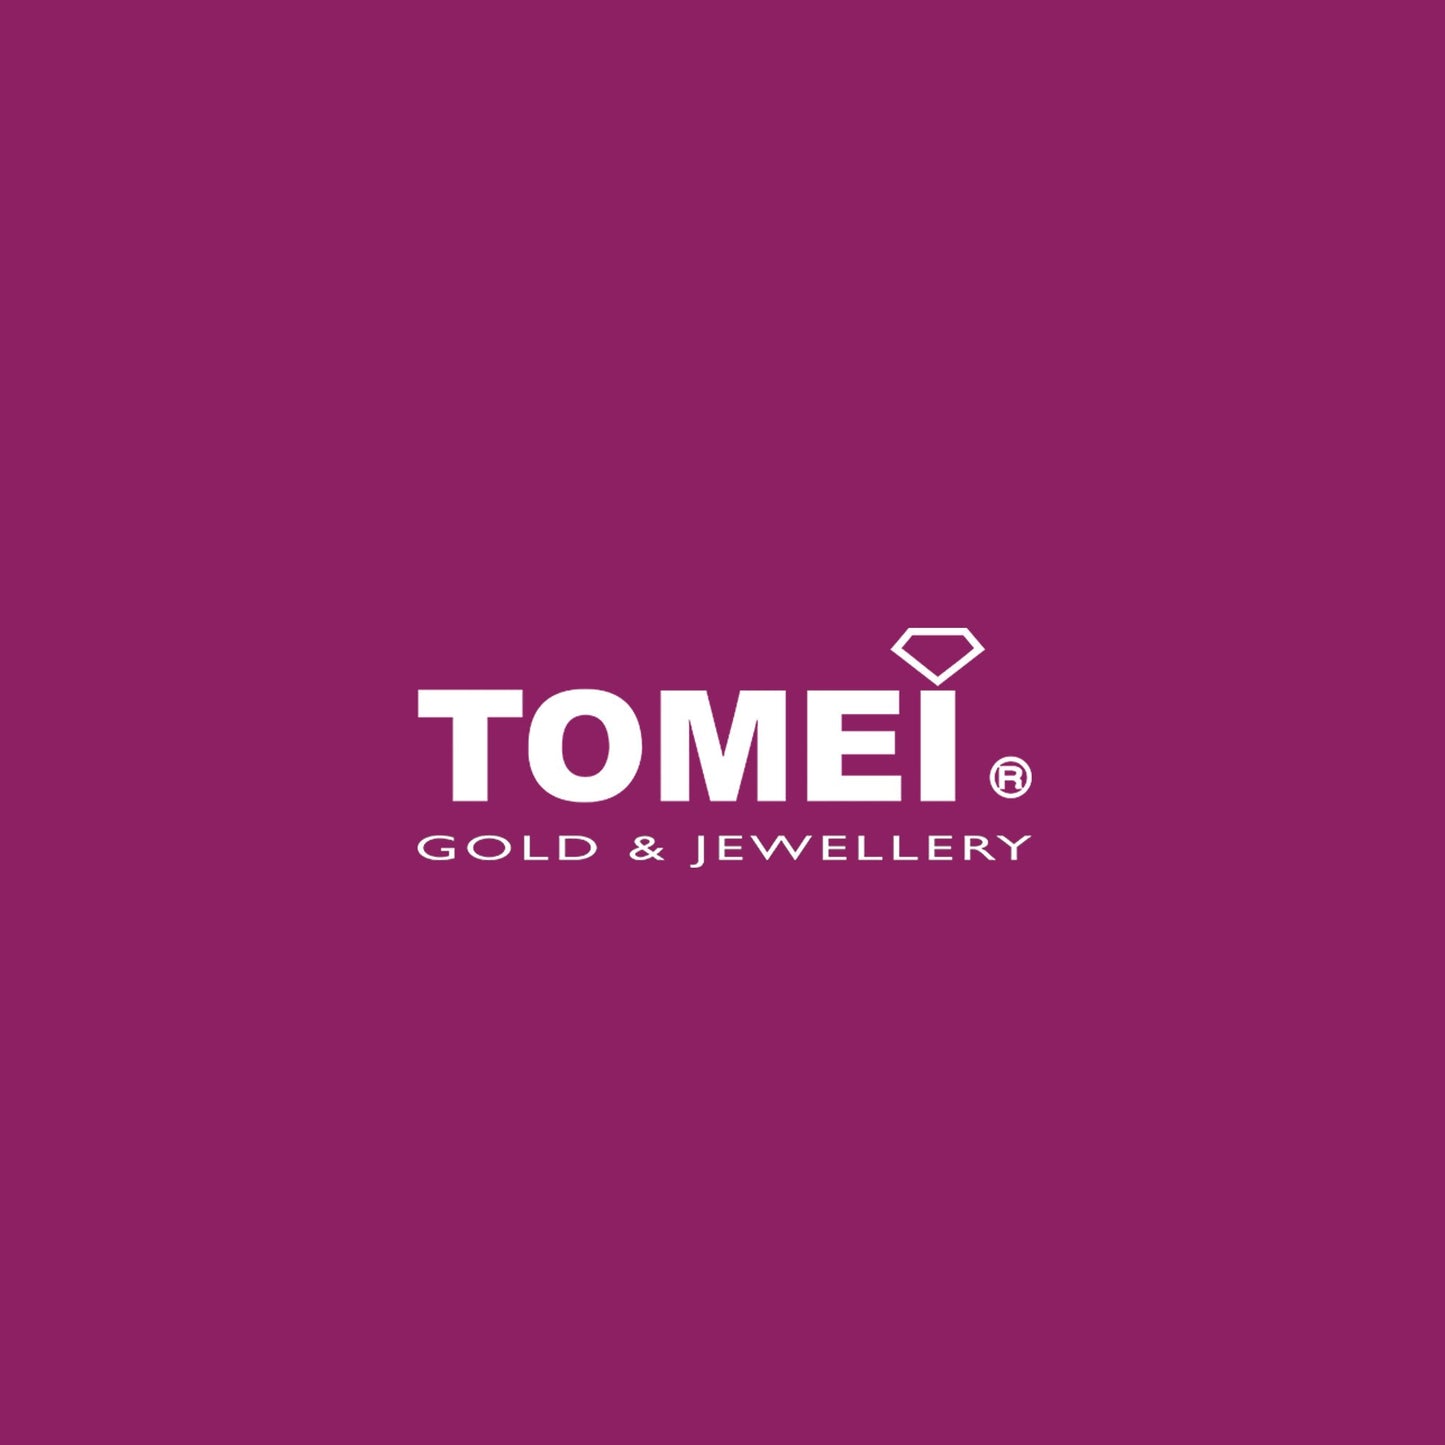 Tomei Rose Gold 585 (14K) "Gender Symbol" Chomel Charm (P5744R)